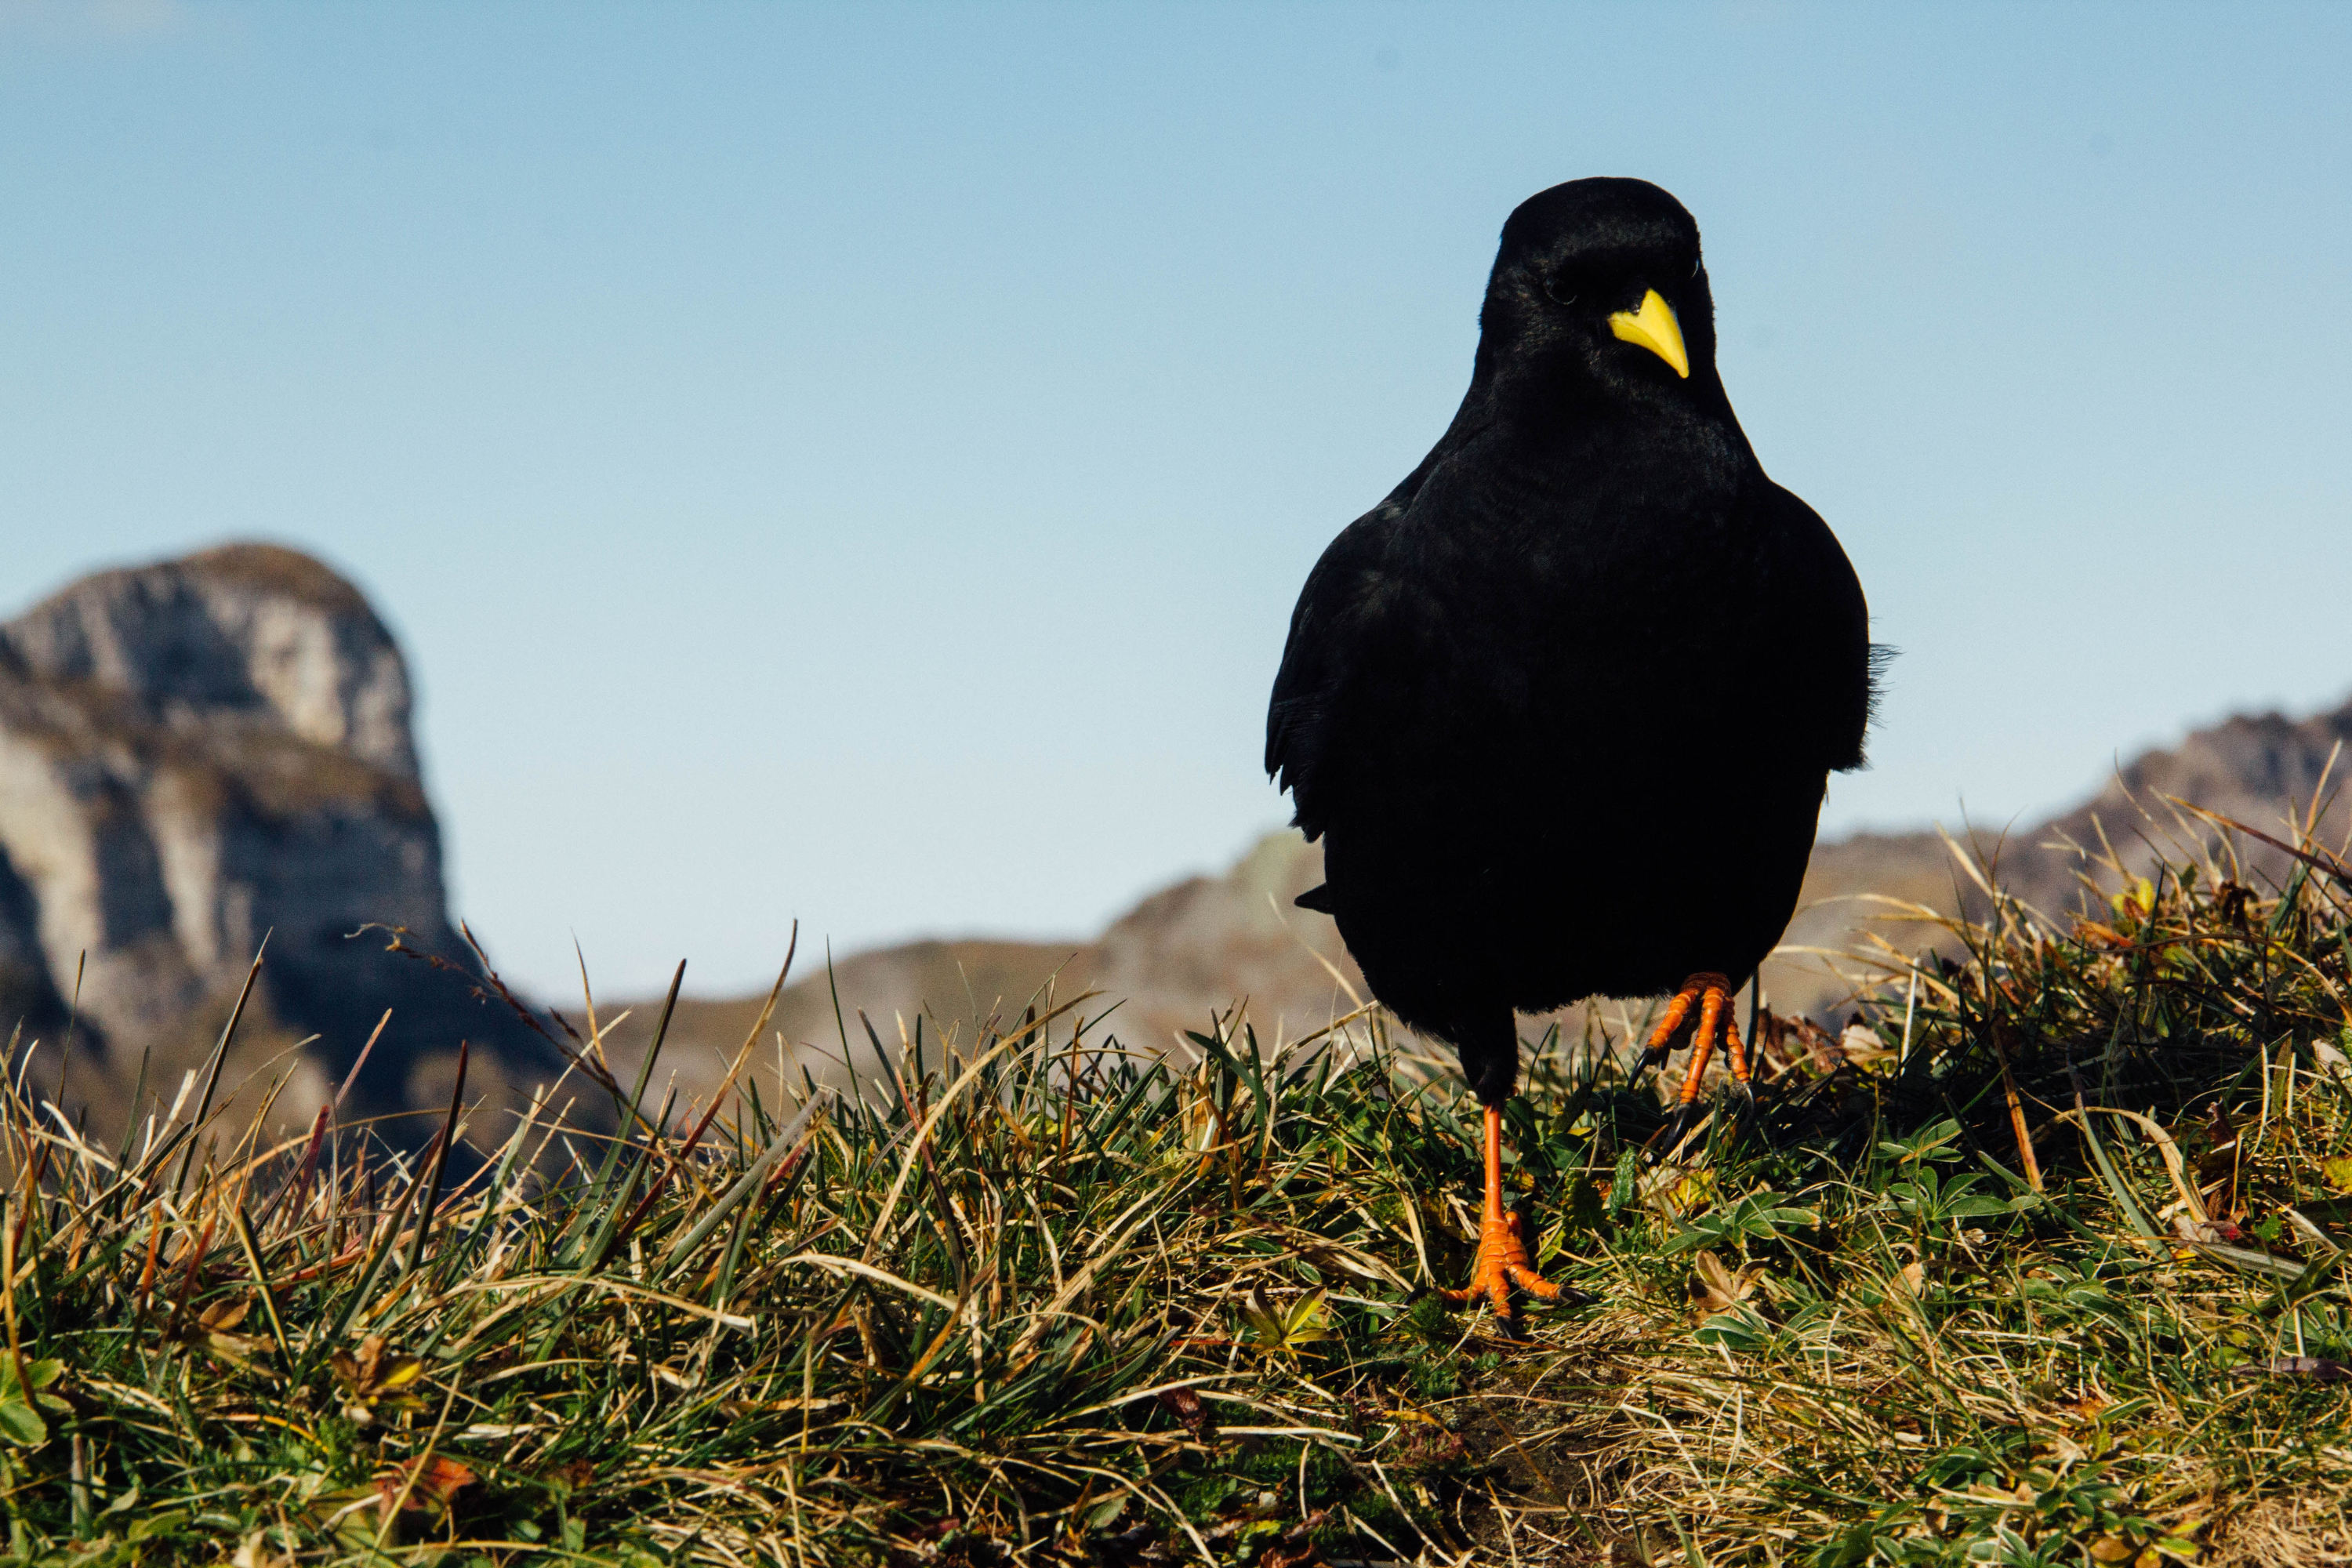 A Black Bird Presents Itself | An Example of Animal Symbolism